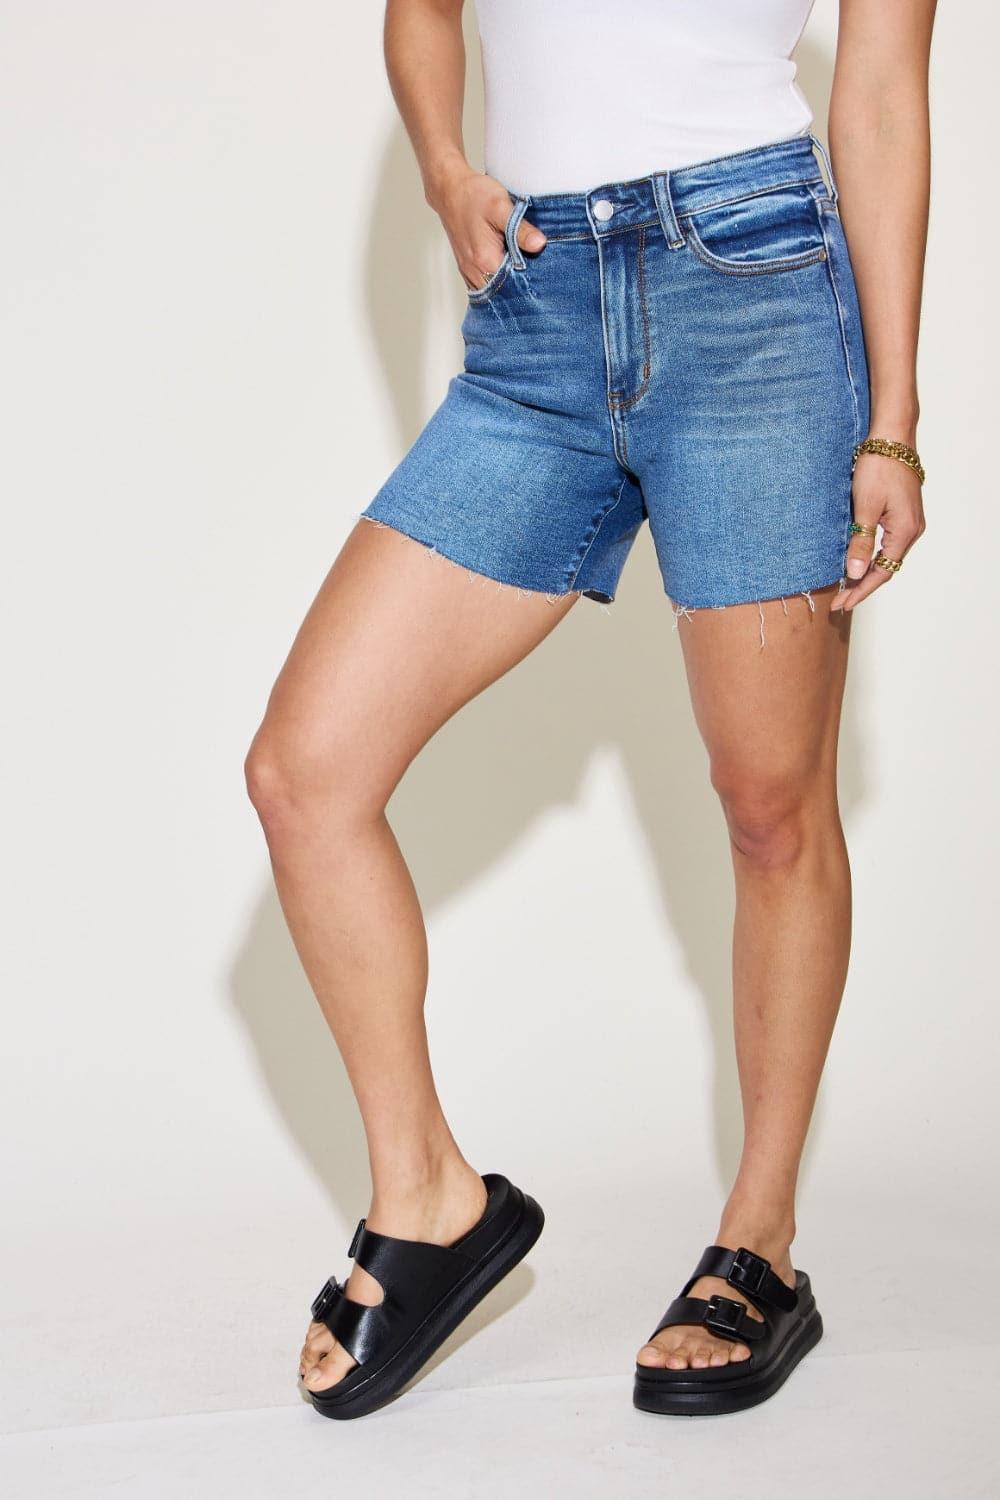 Judy Blue Full Size High Waist Slim Denim Shorts - SwagglyLife Home & Fashion